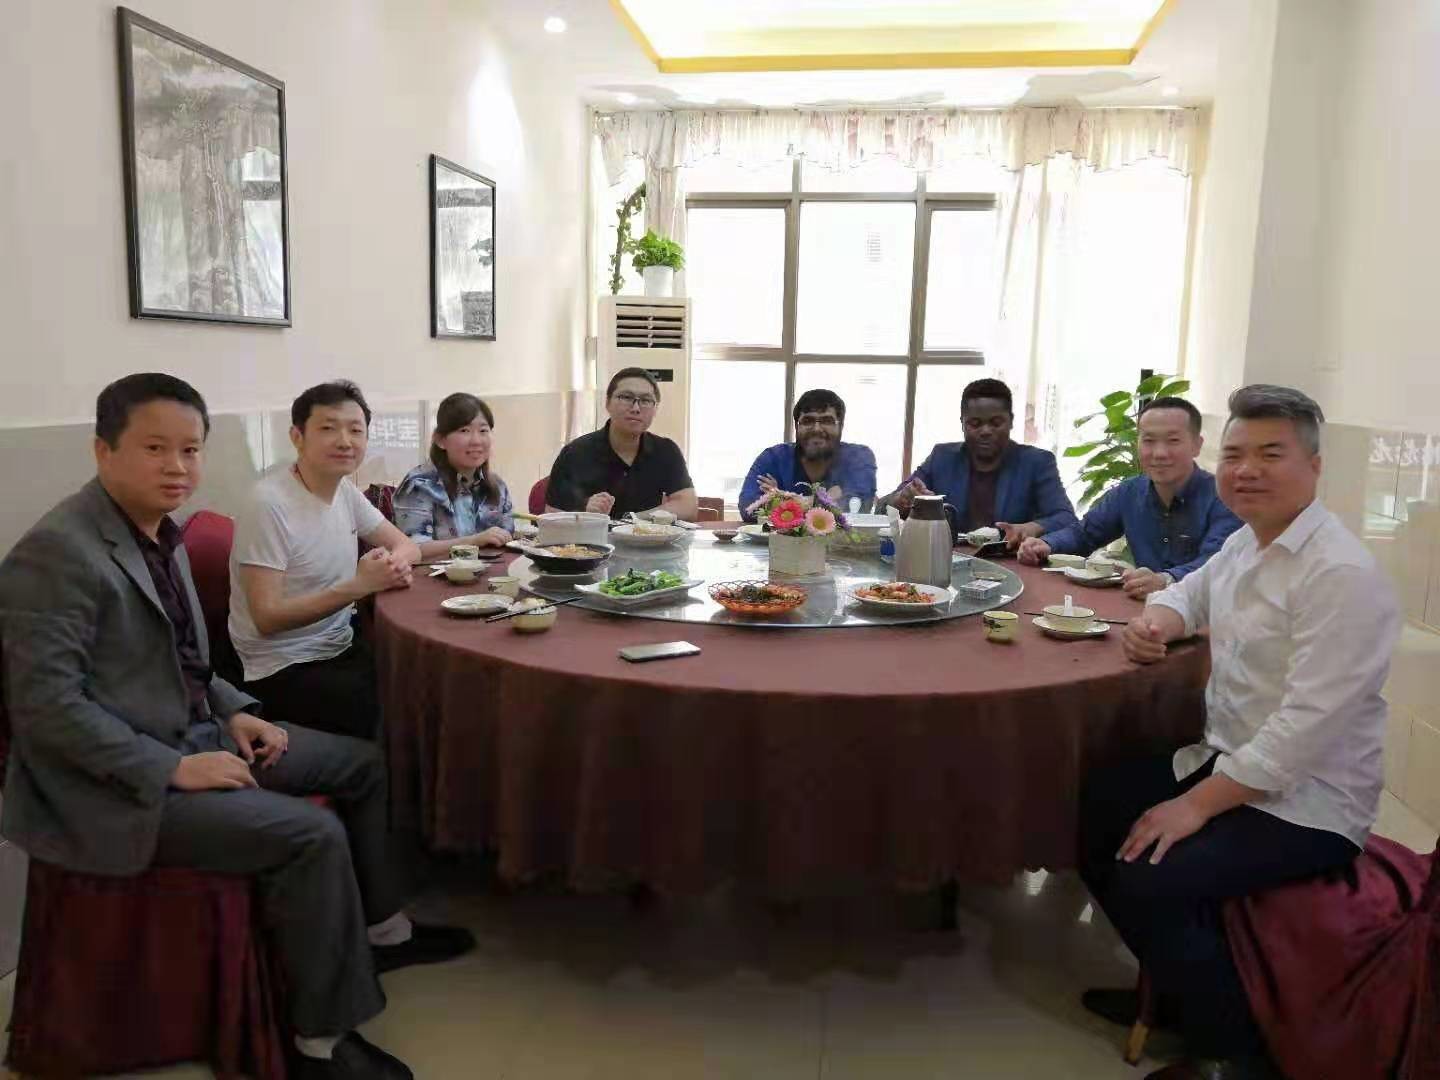 Hunan Chalong Fly Energy Technology Co., Ltd.